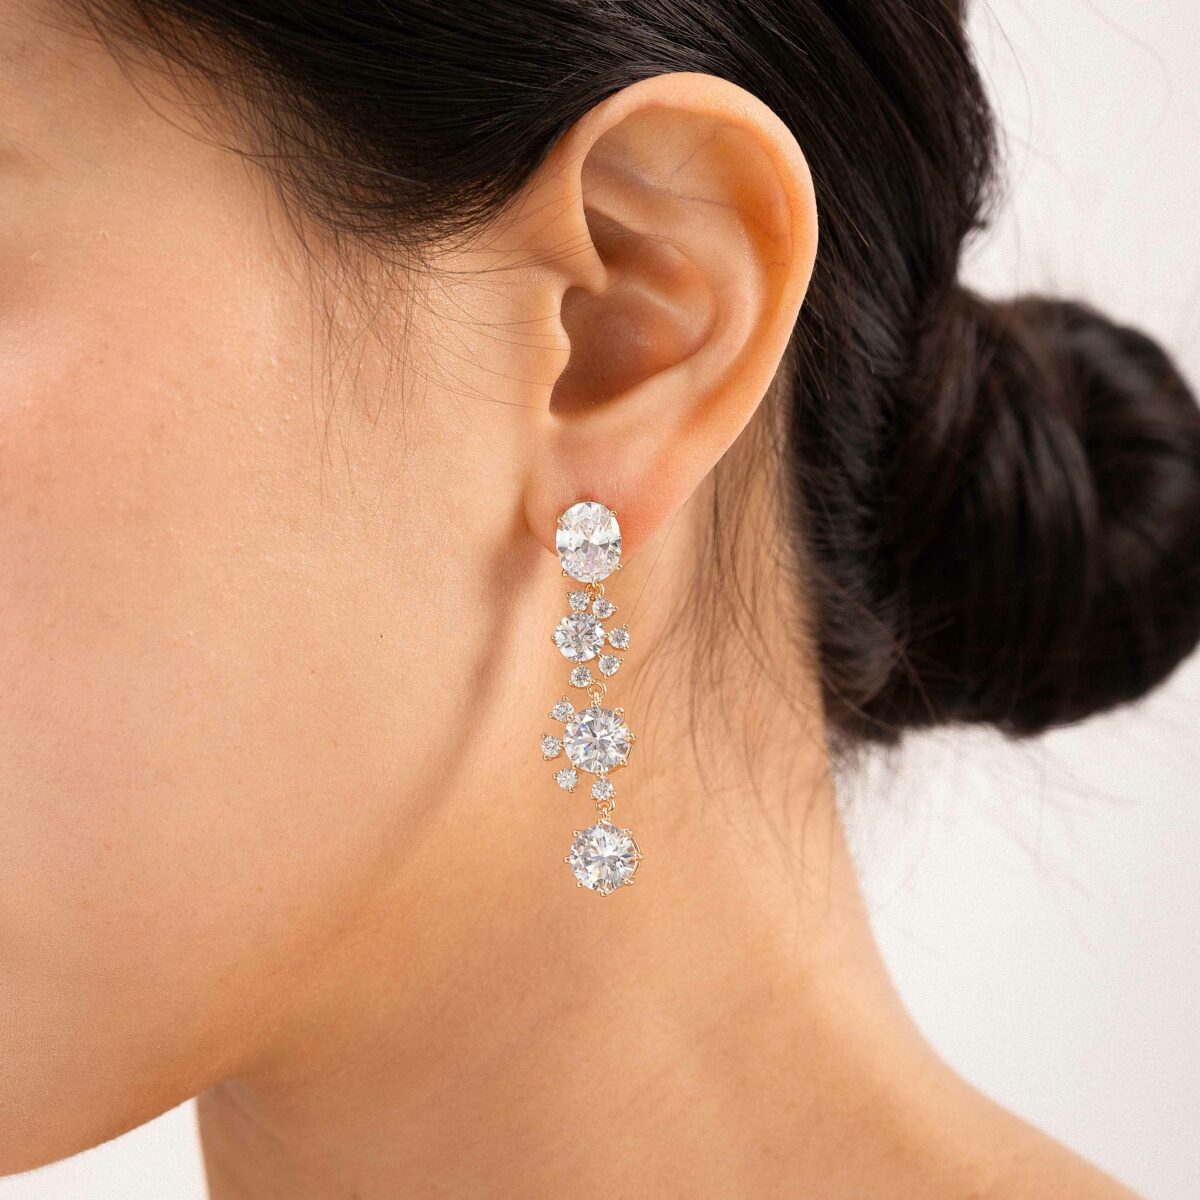 https://m.clubbella.co/product/harris-14k-gold-plated-crystal-earrings/ HARRIS CRYSTAL EARRINGS (7)